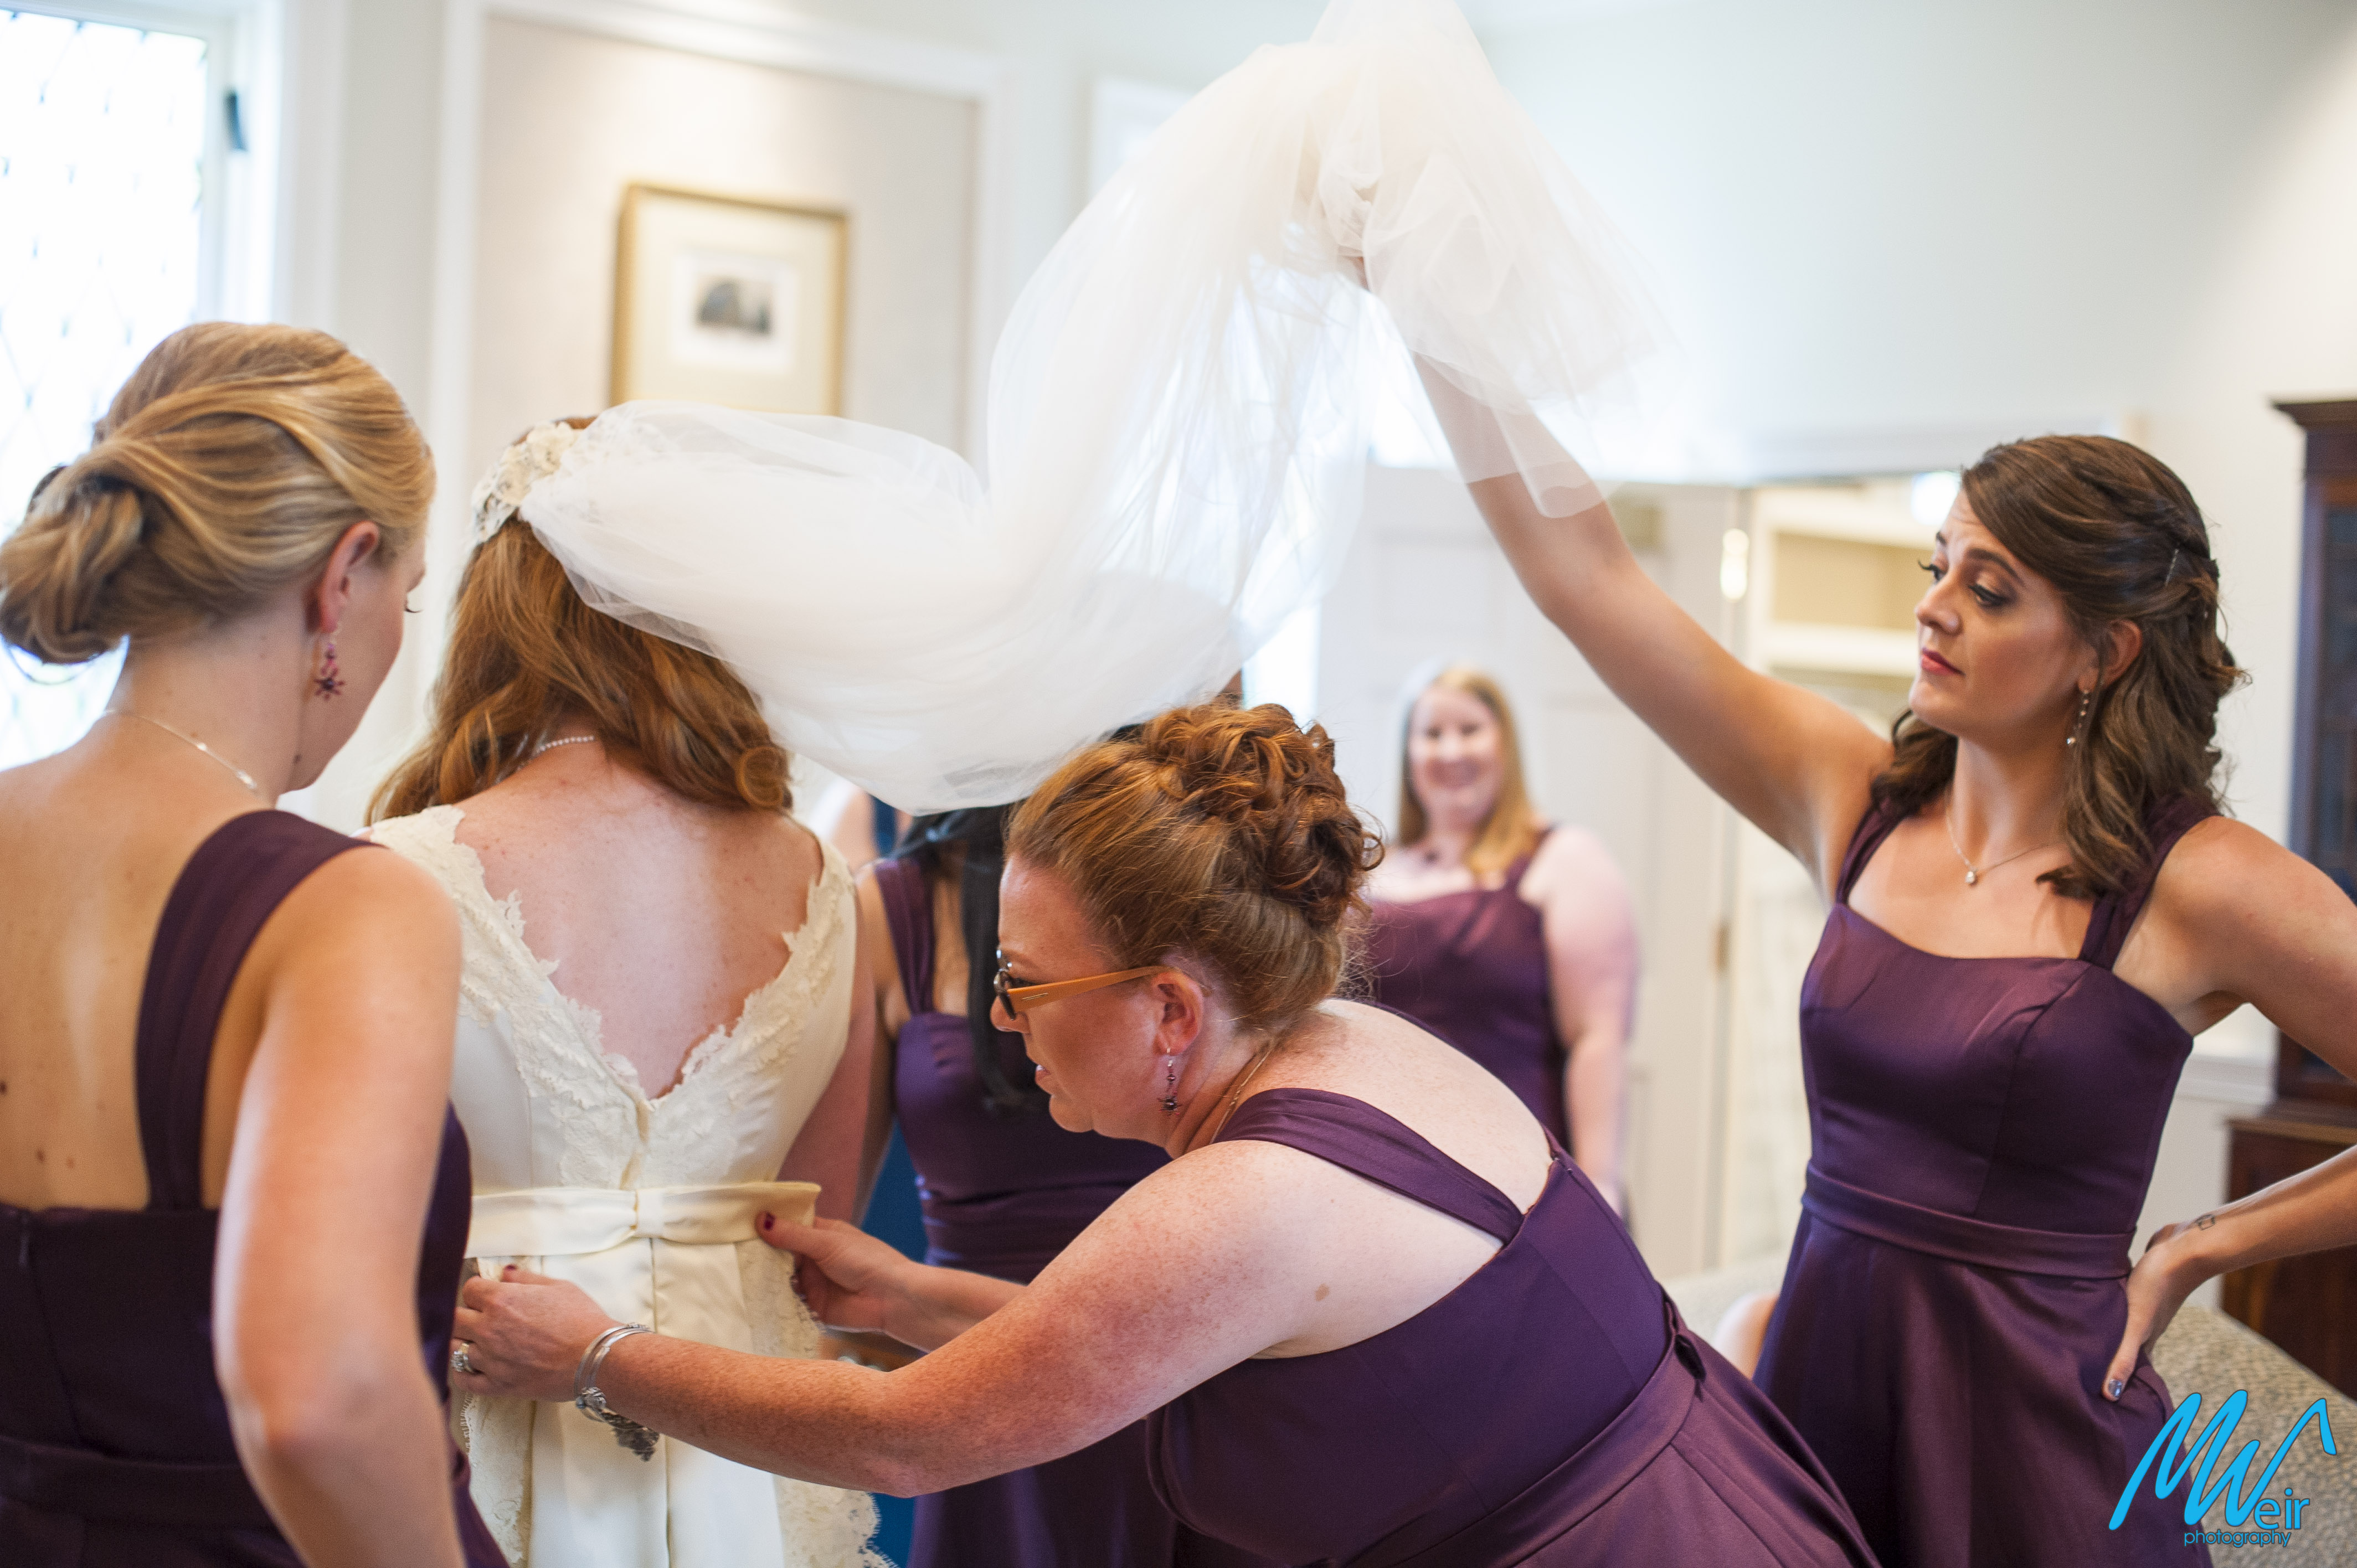 brides sister helps put detachable train on the brides dress